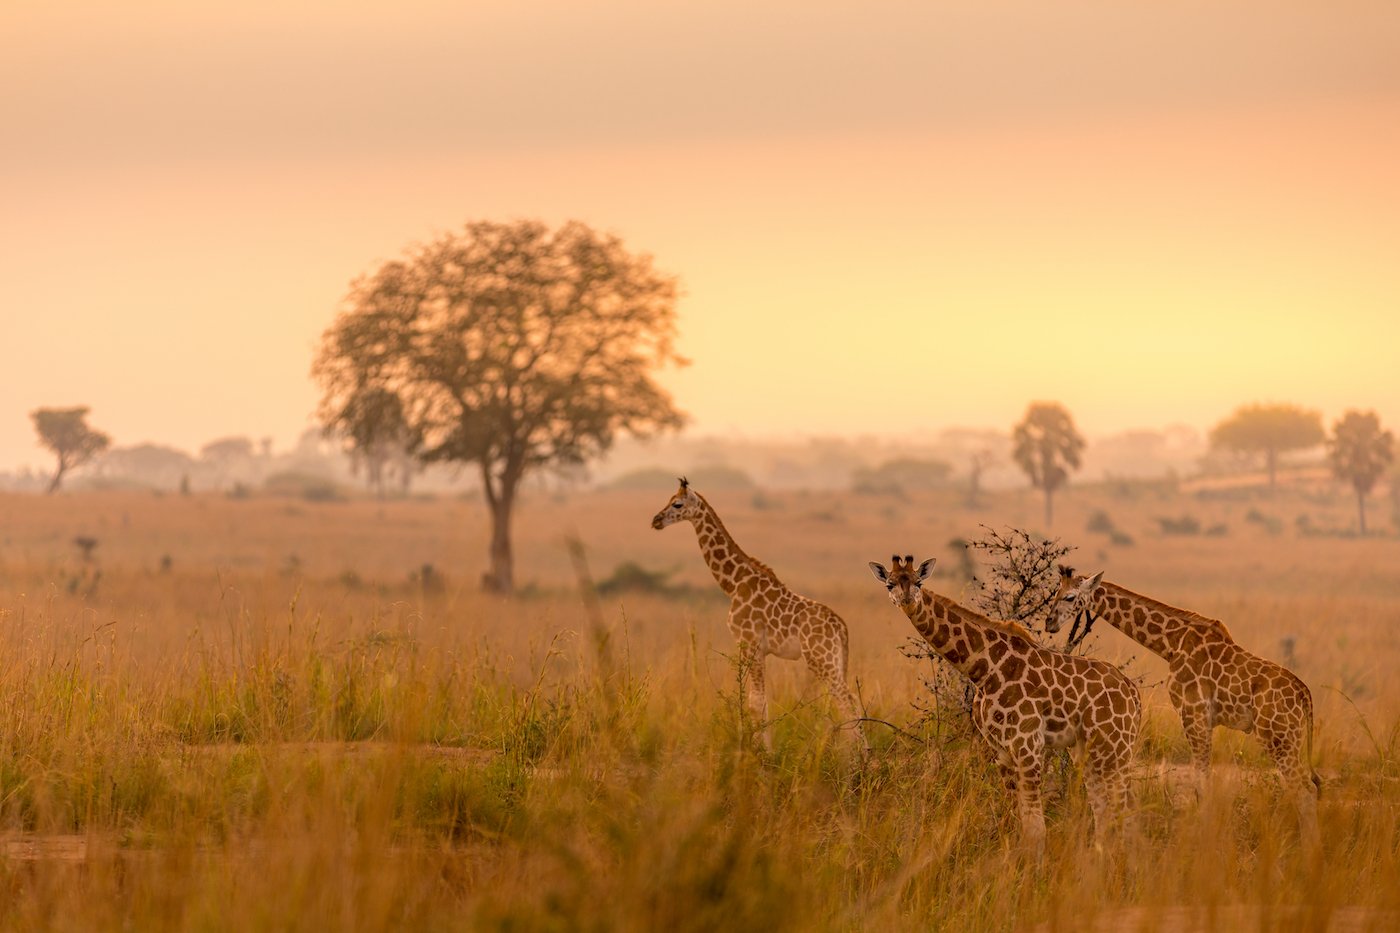 75% of all Rothschild's giraffes live in Murchison Falls National Park.